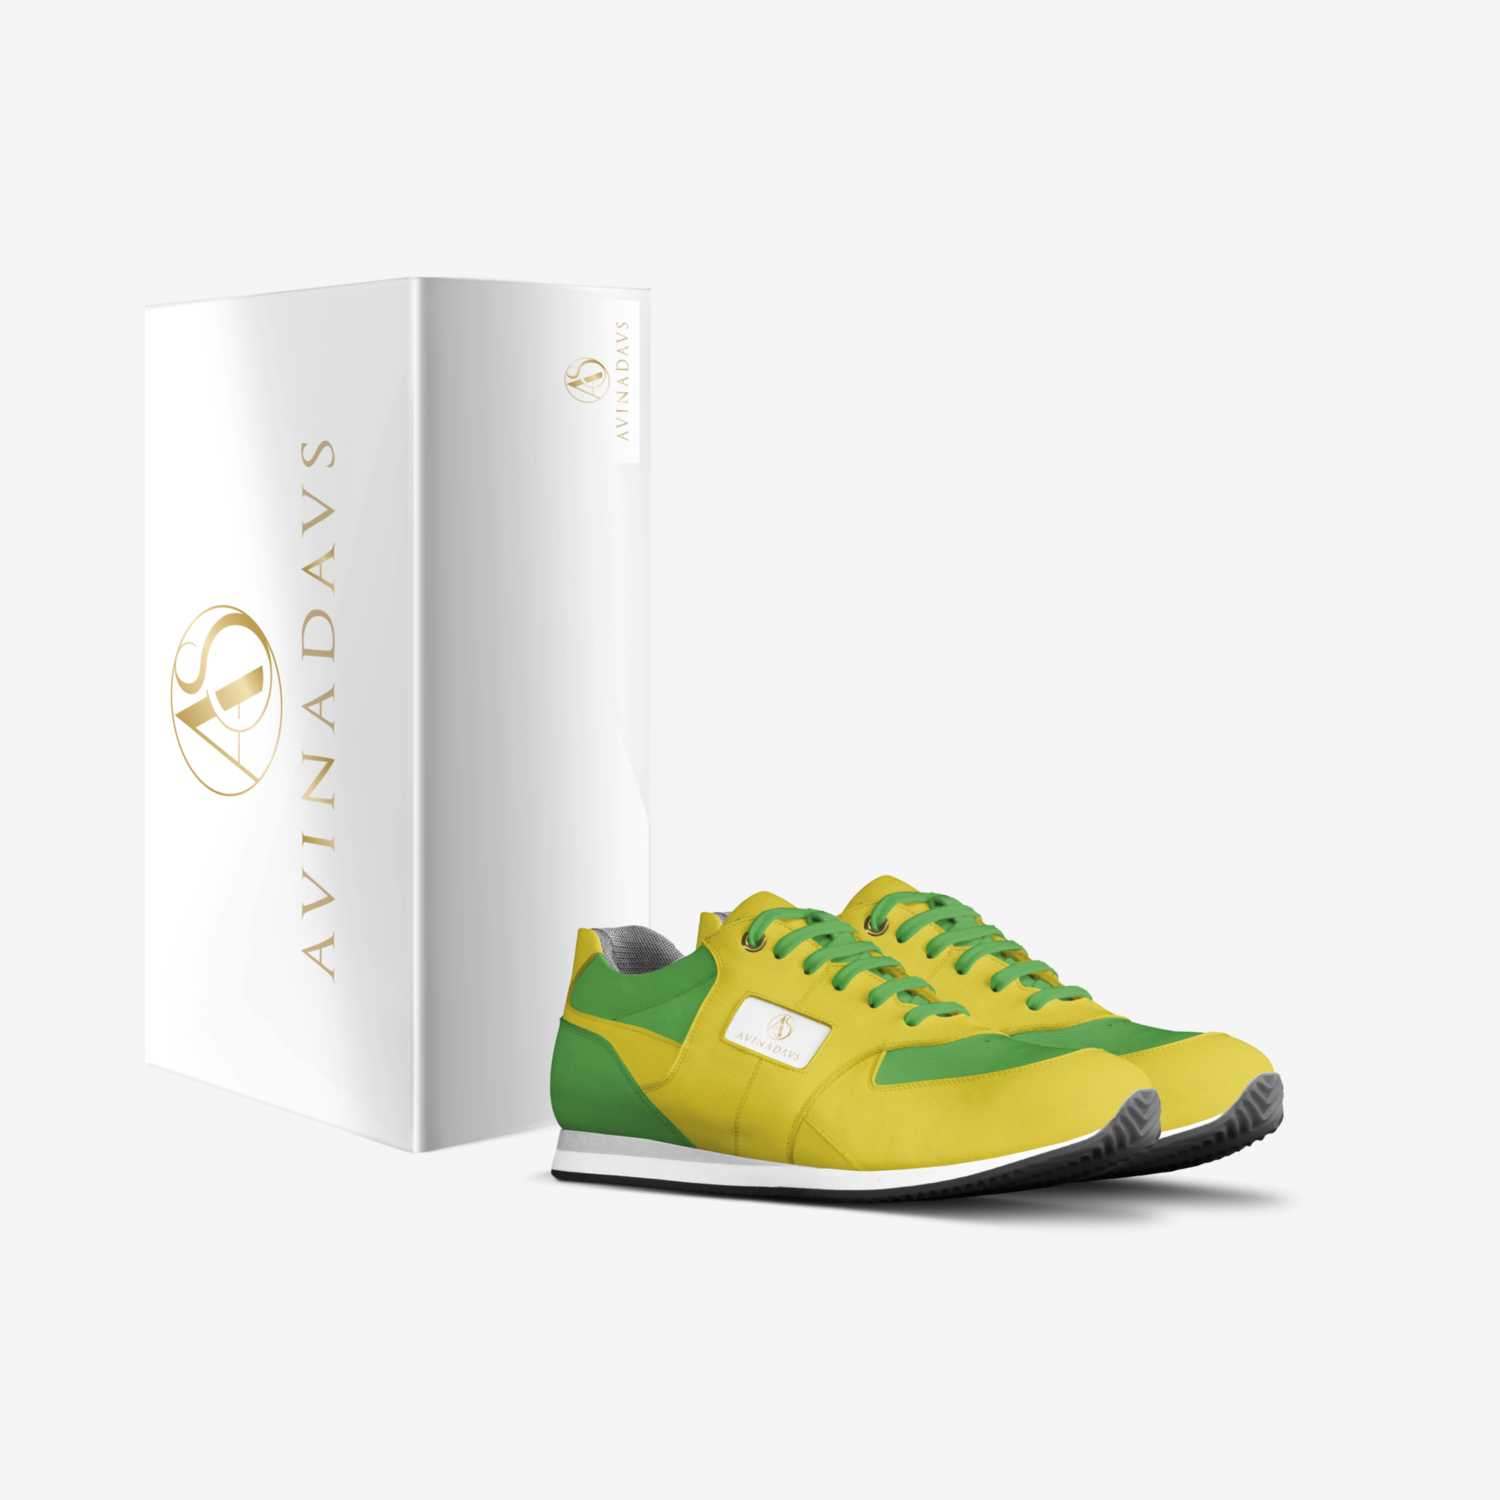 Avinadav Sabaitis custom made in Italy shoes by Avinadav Sabaitis | Box view